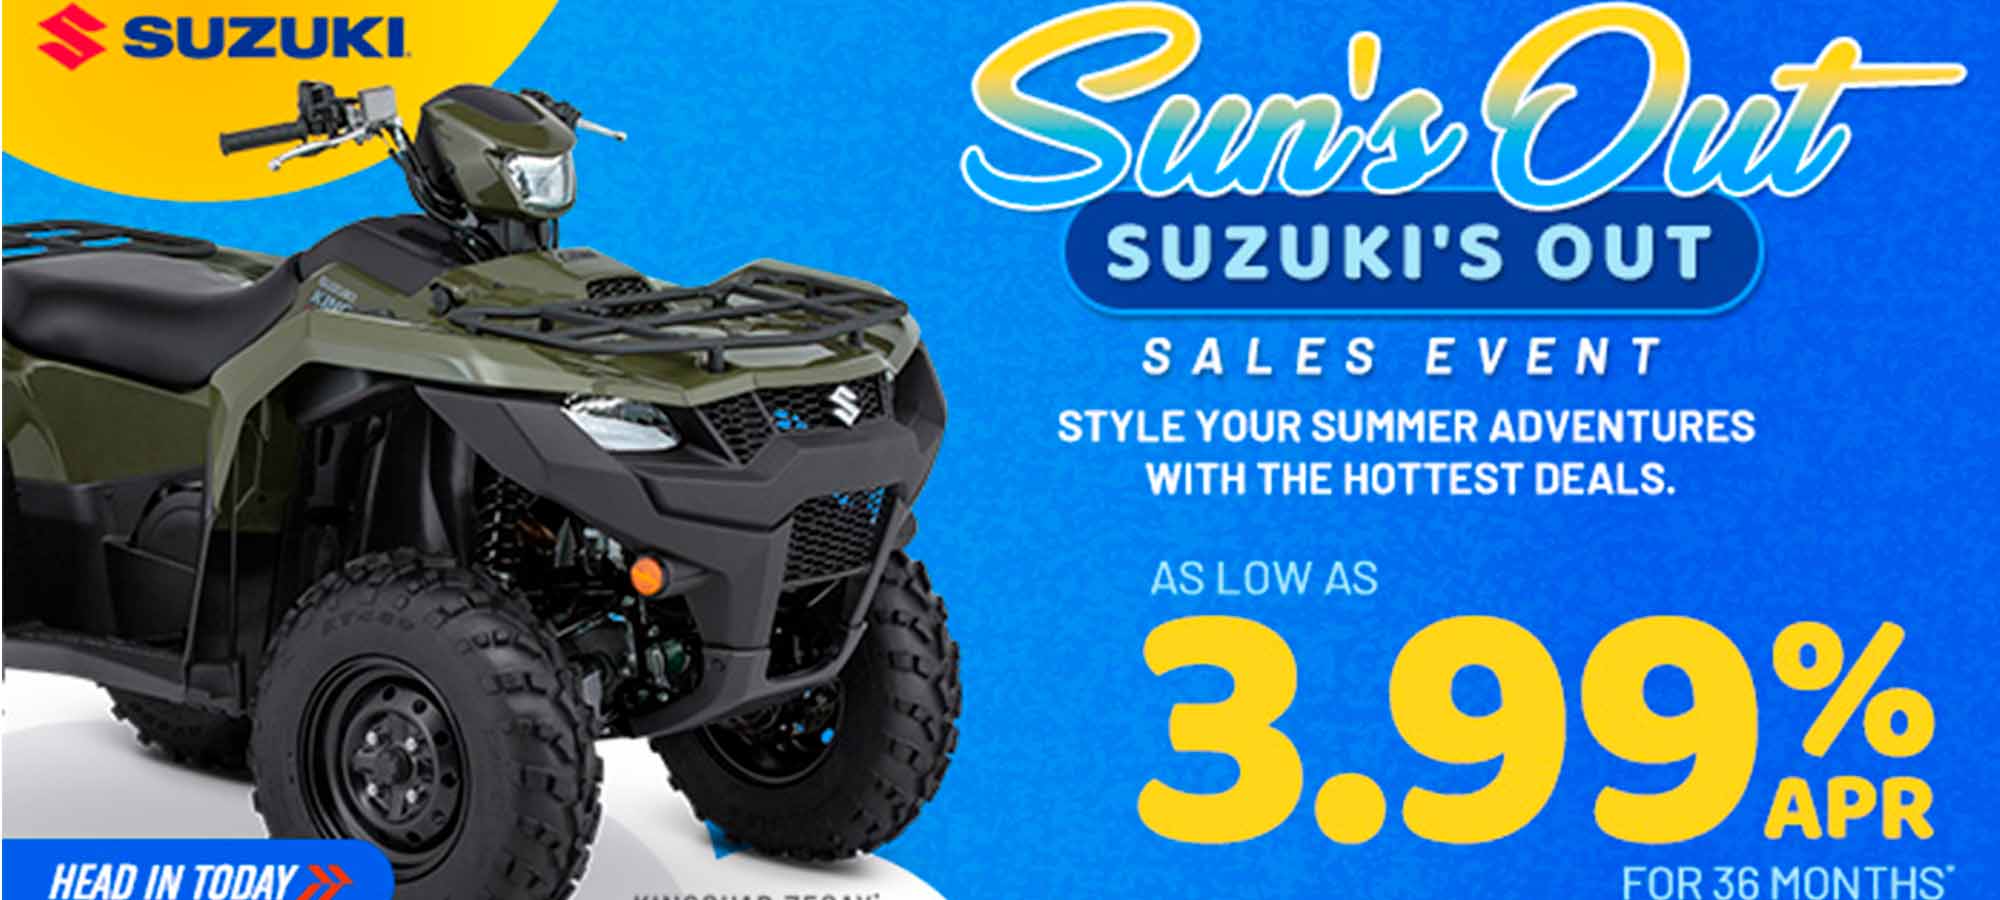 Suzuki US - Sun's Out Suzuki's Out Sales Event at Santa Fe Motor Sports